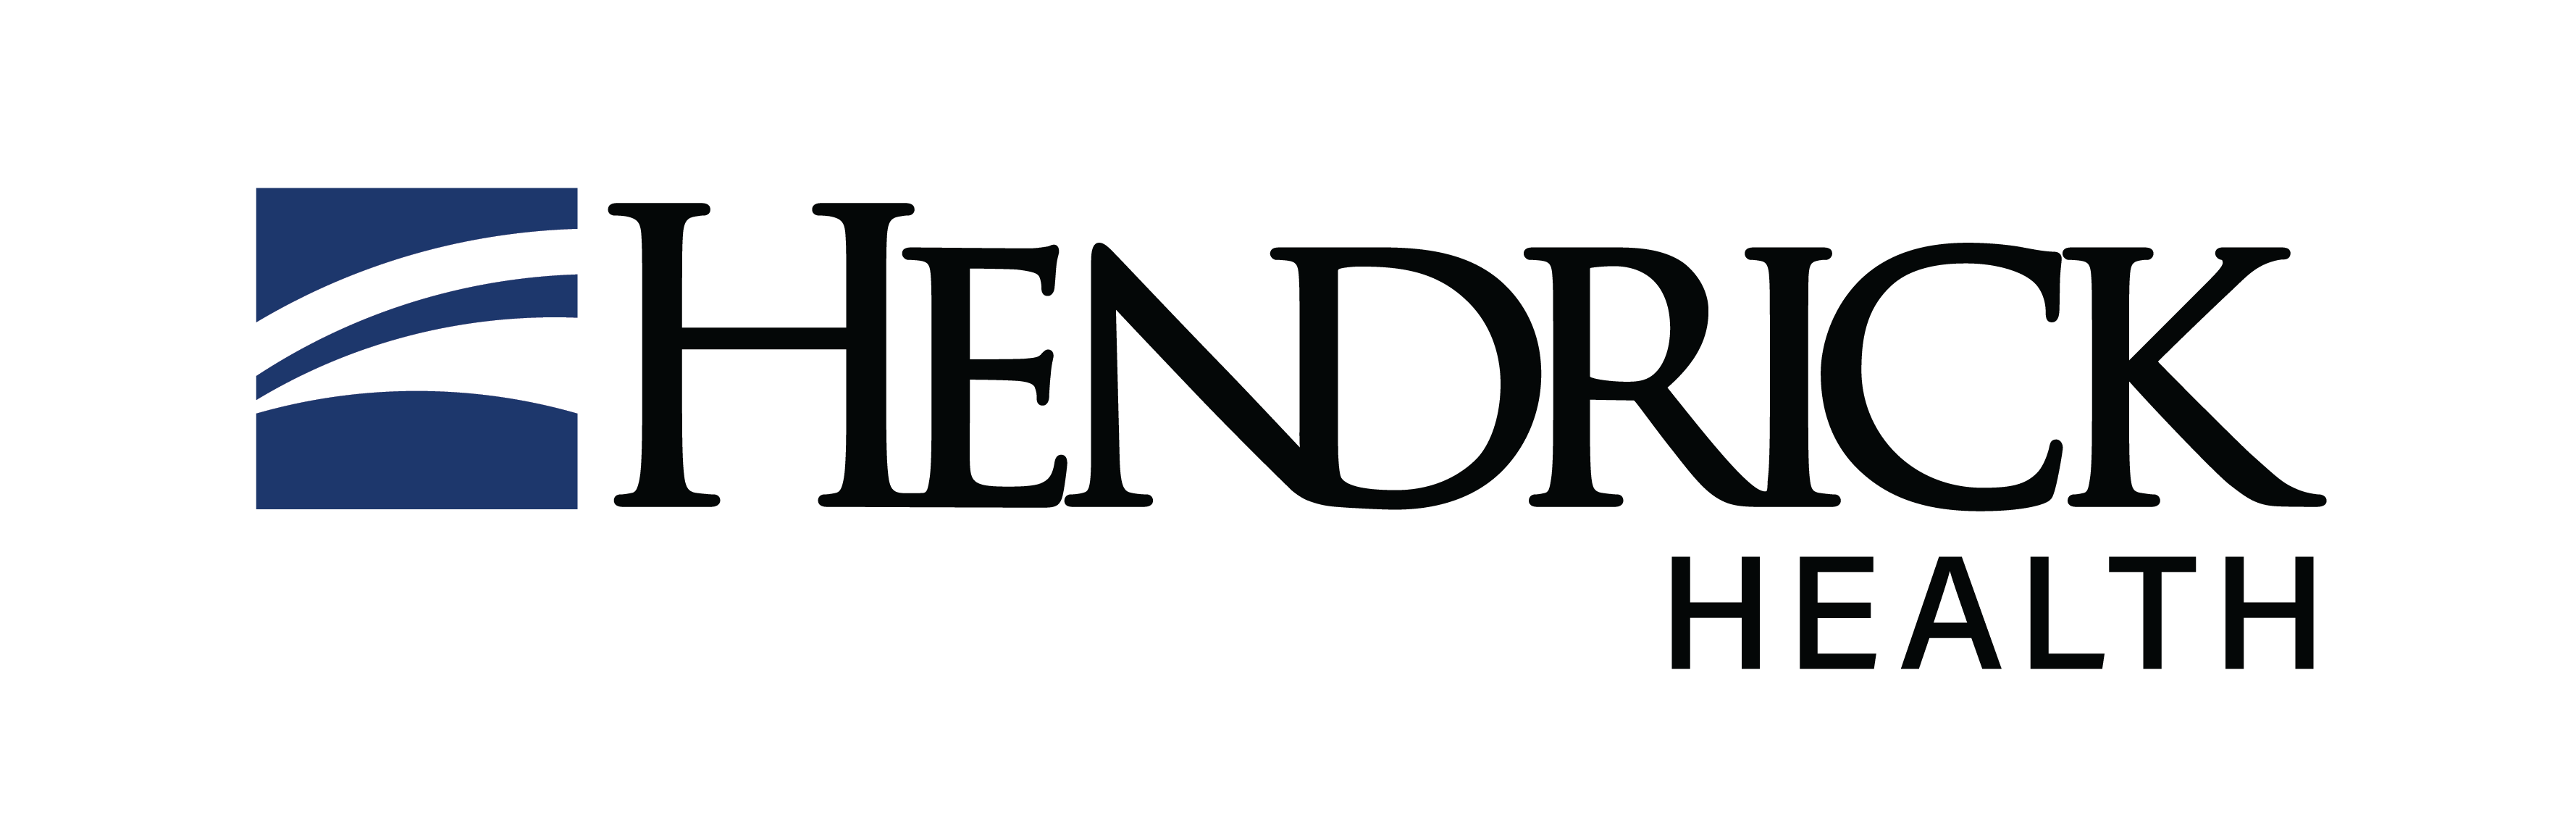 Corporate - Hendrick Health System logo